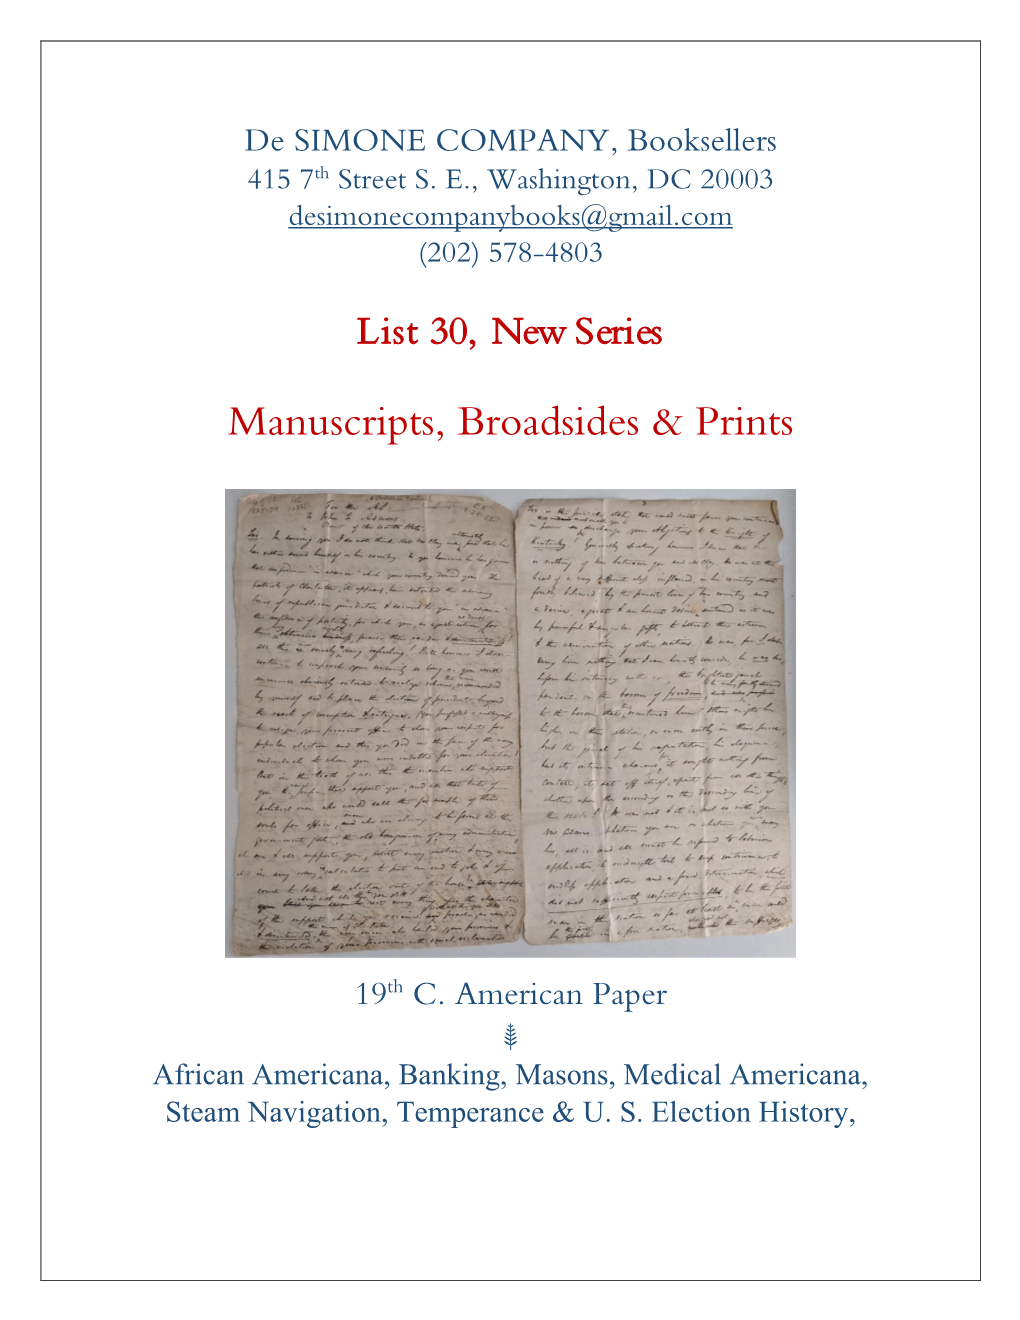 Manuscripts, Broadsides & Prints